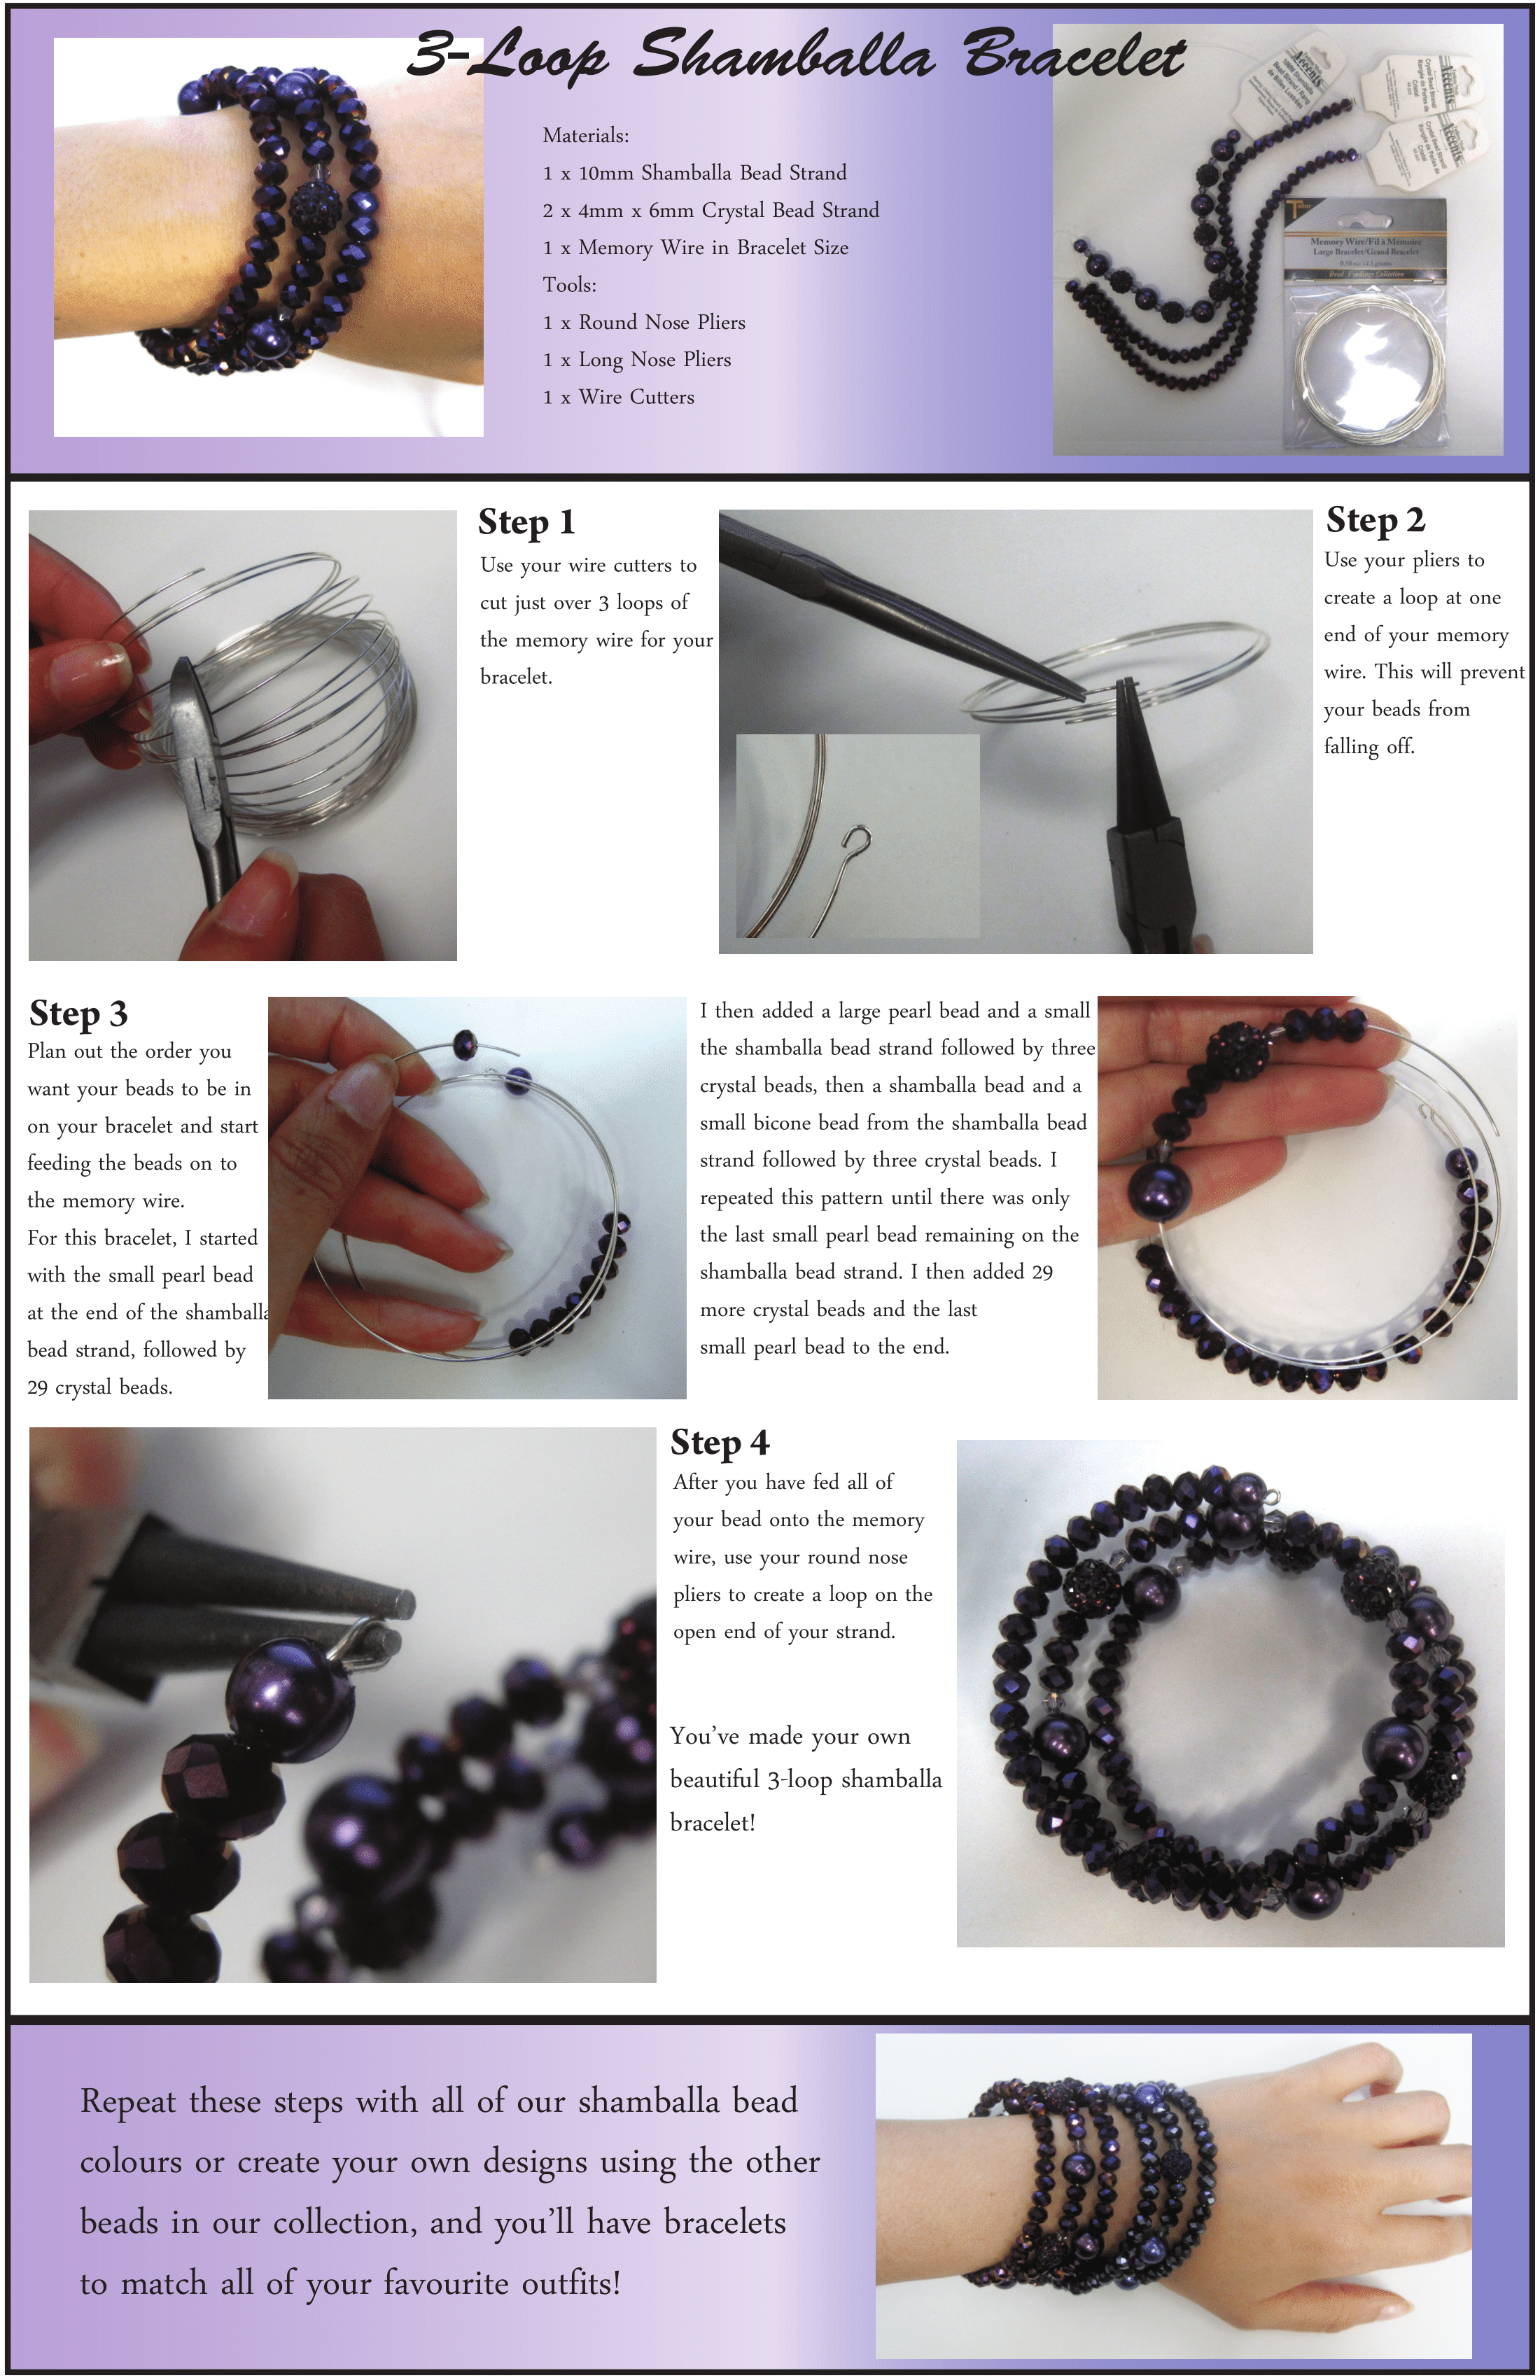 Materials & steps to create a 3-loop shamballa bracelet